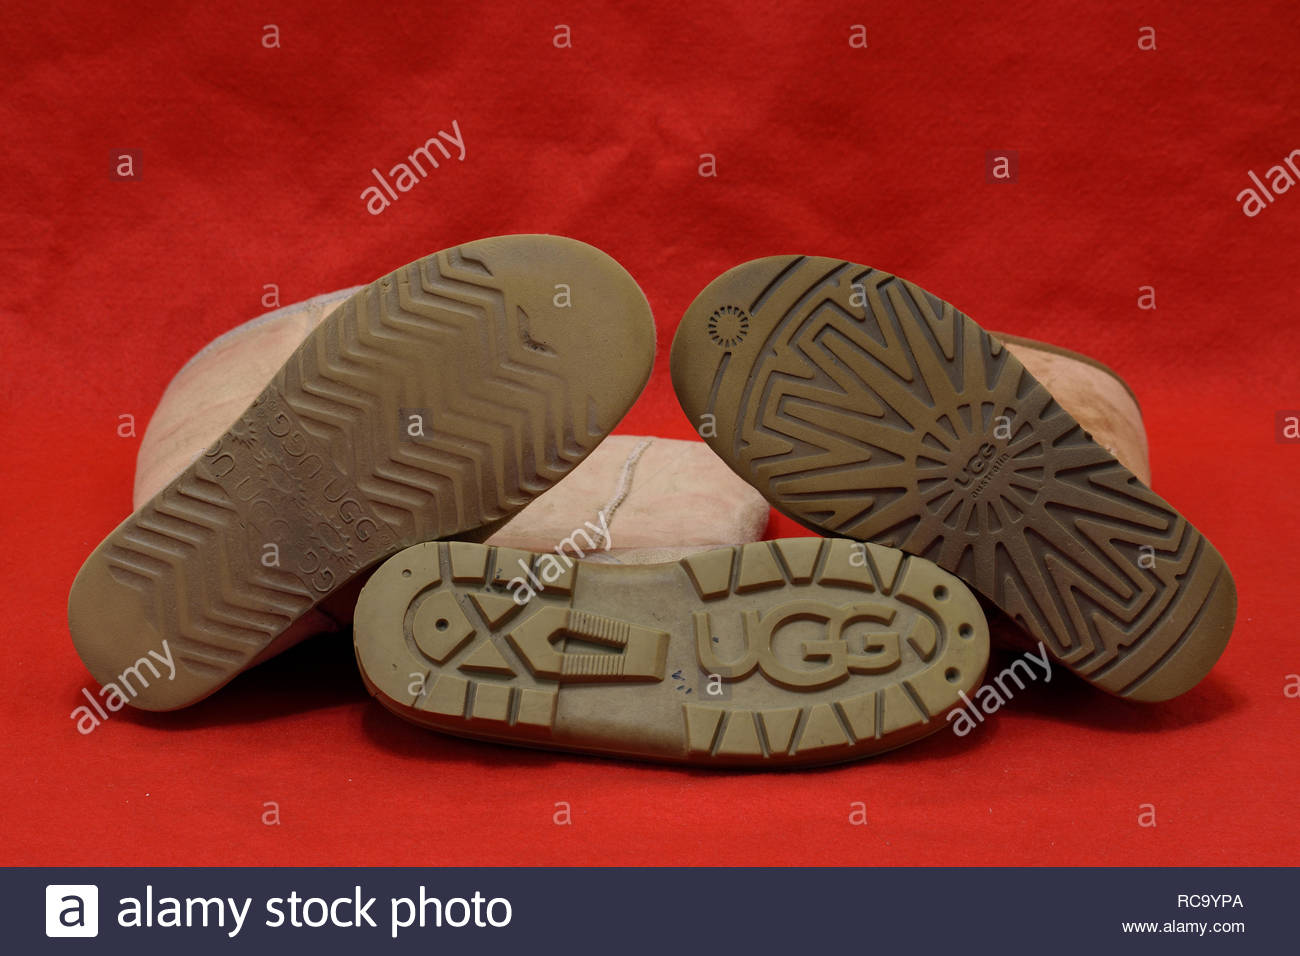 genuine ugg slippers